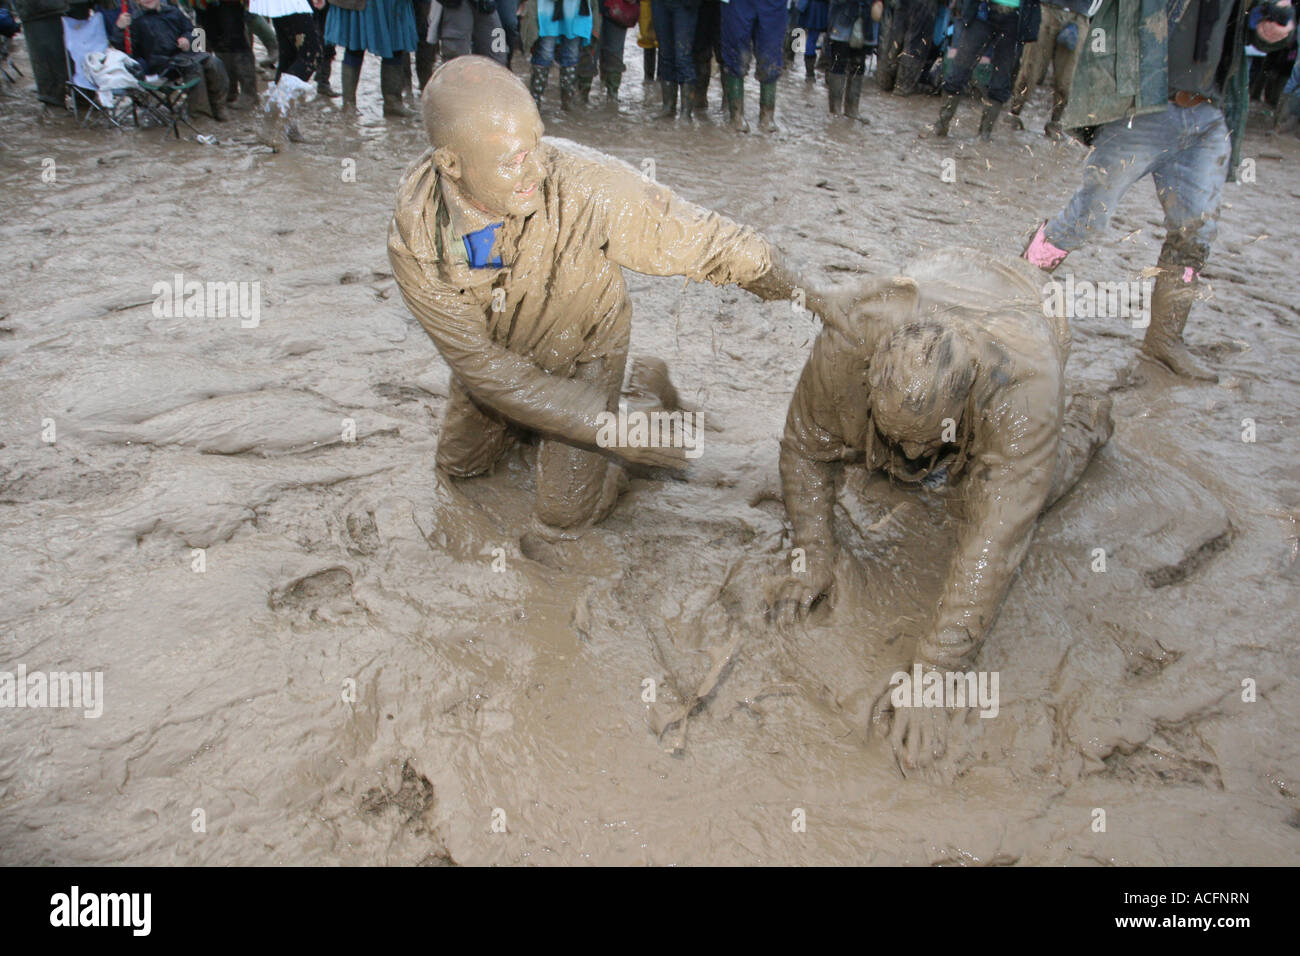 Mud wrestlers at the Glastonbury Festival 2007. Stock Photo